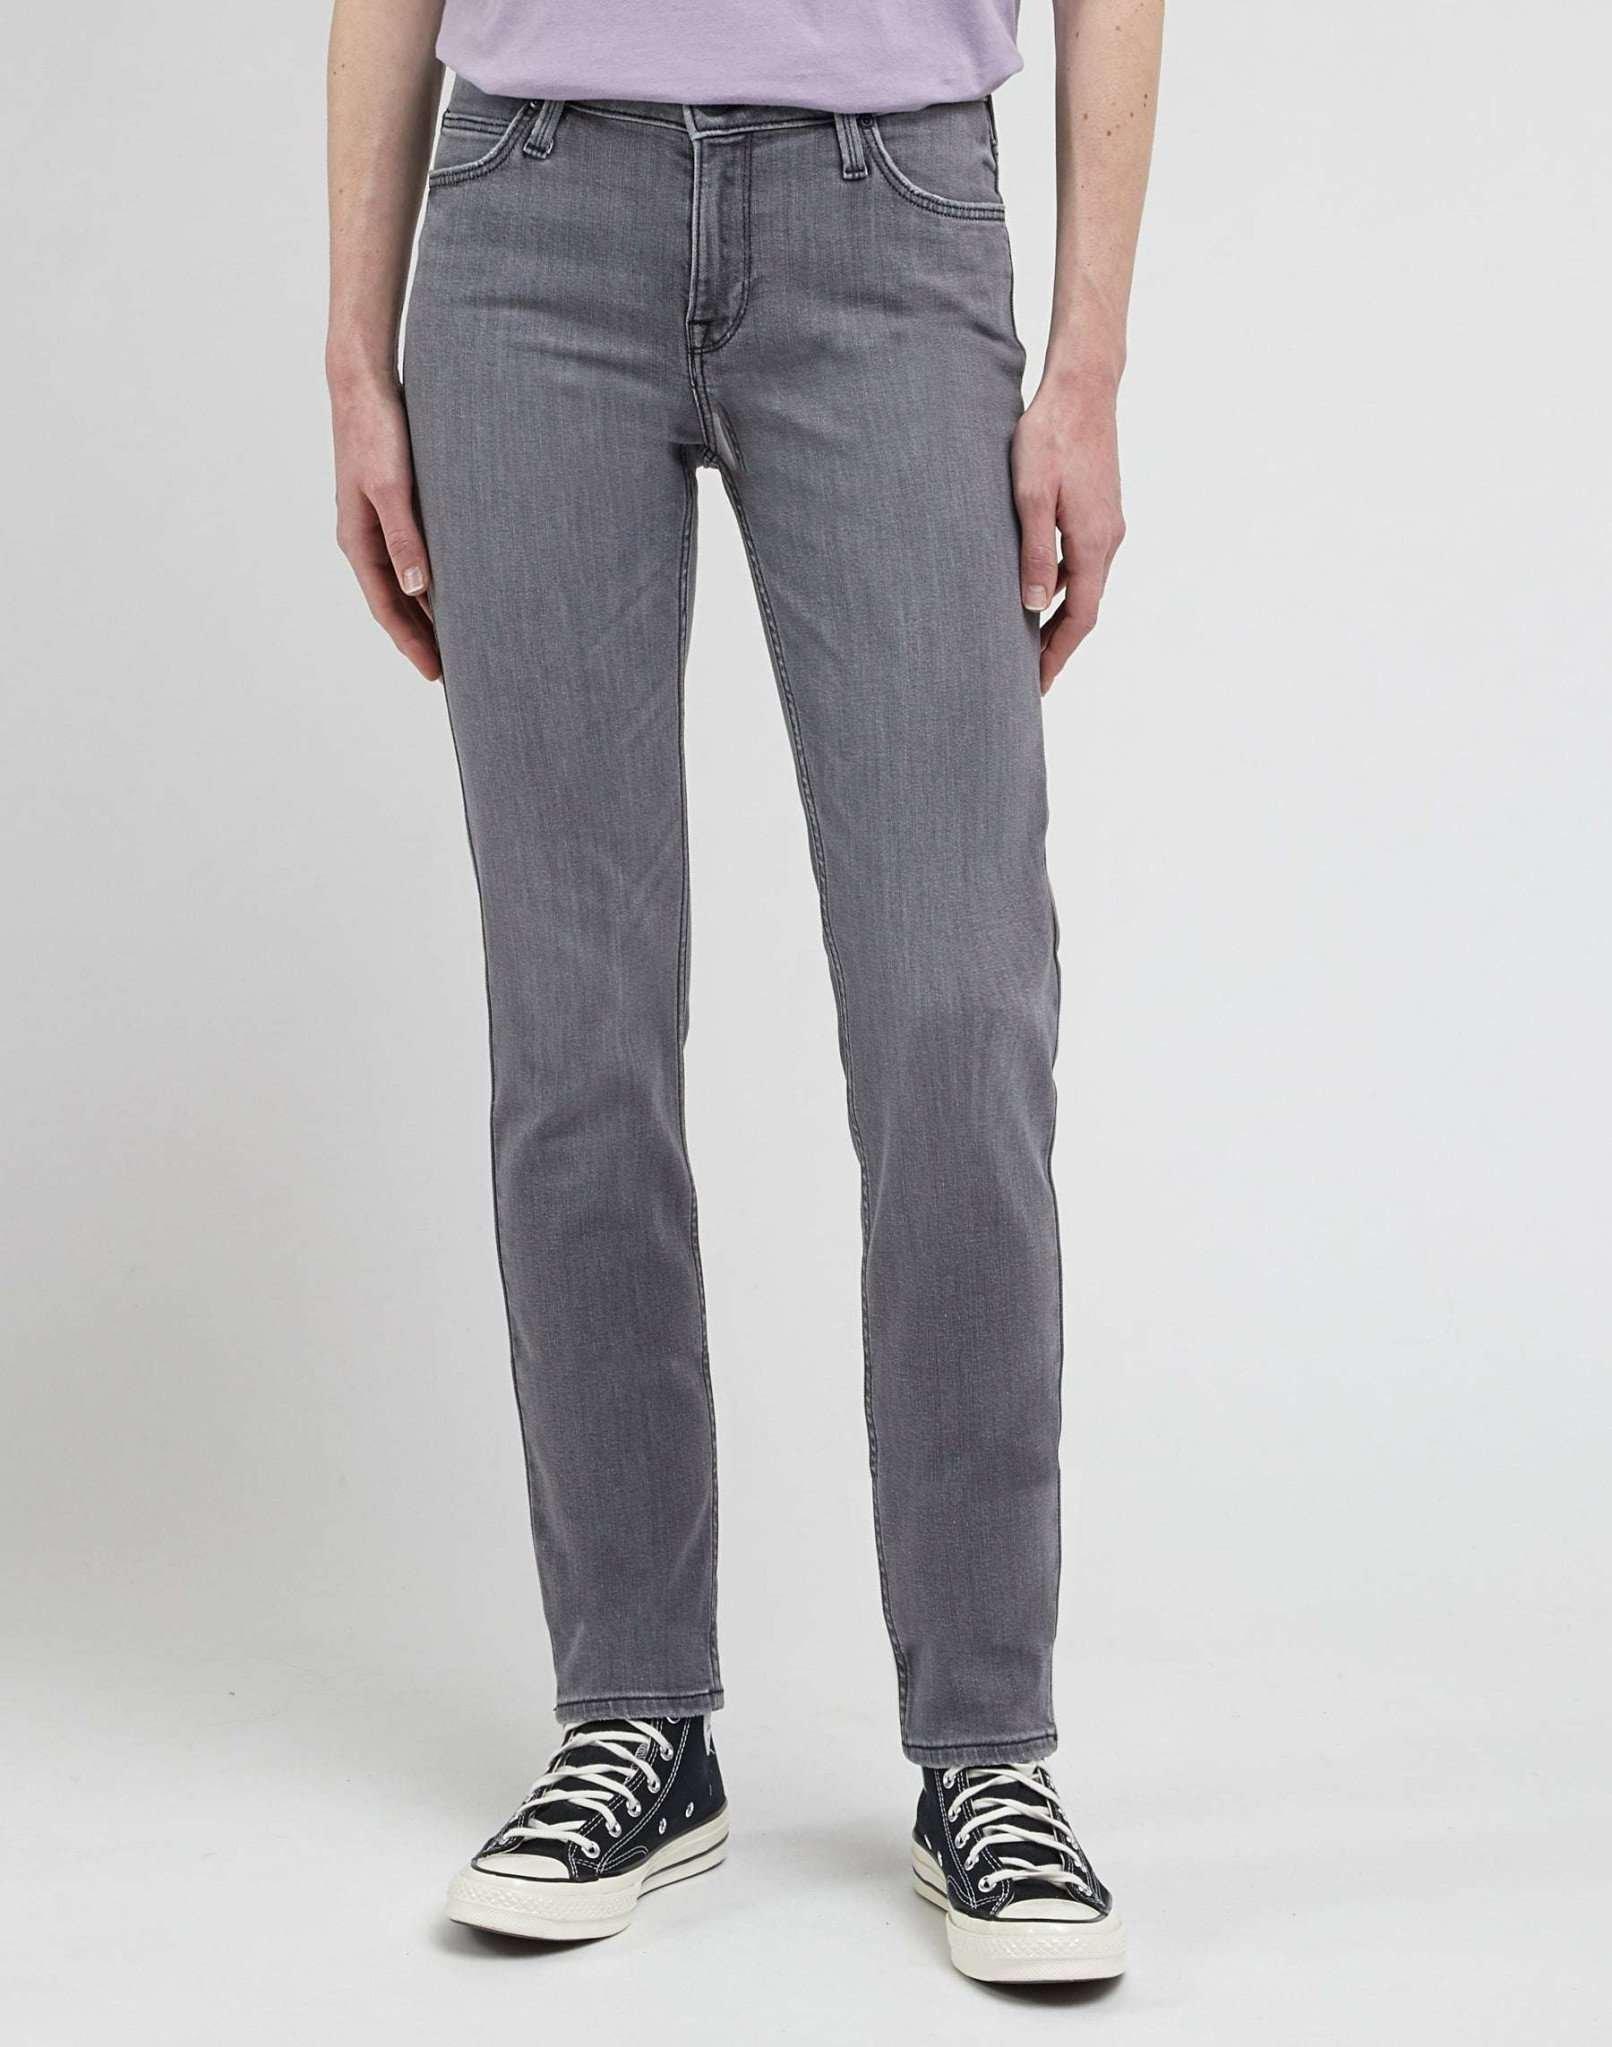 Jeans Slim Fit Elly Damen Taubengrau L33/W30 von Lee